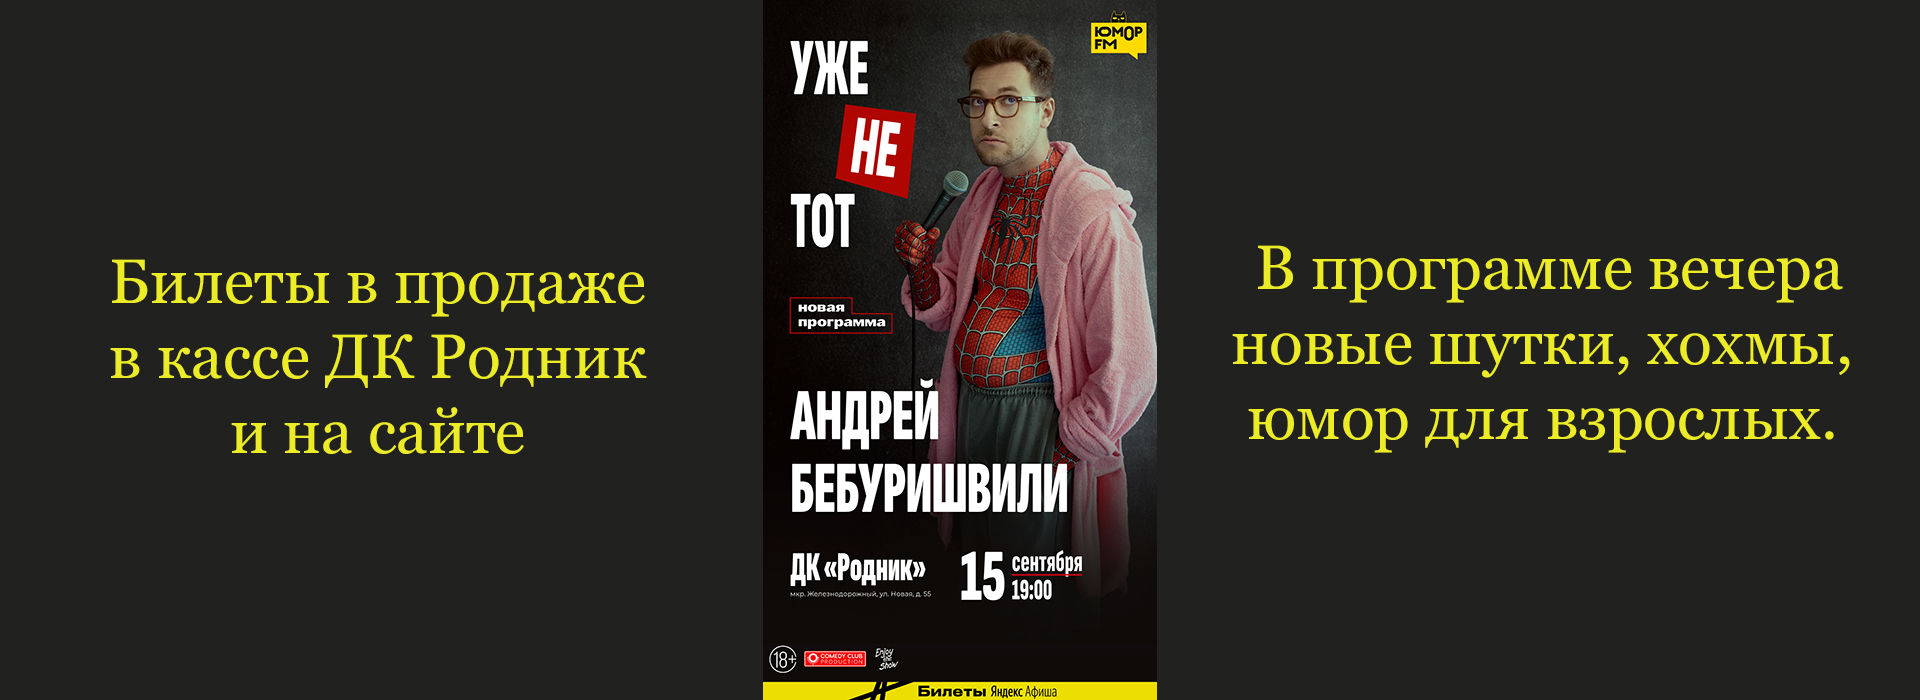 Stand Up концерт Андрея Бебуришвили "Уже не тот"